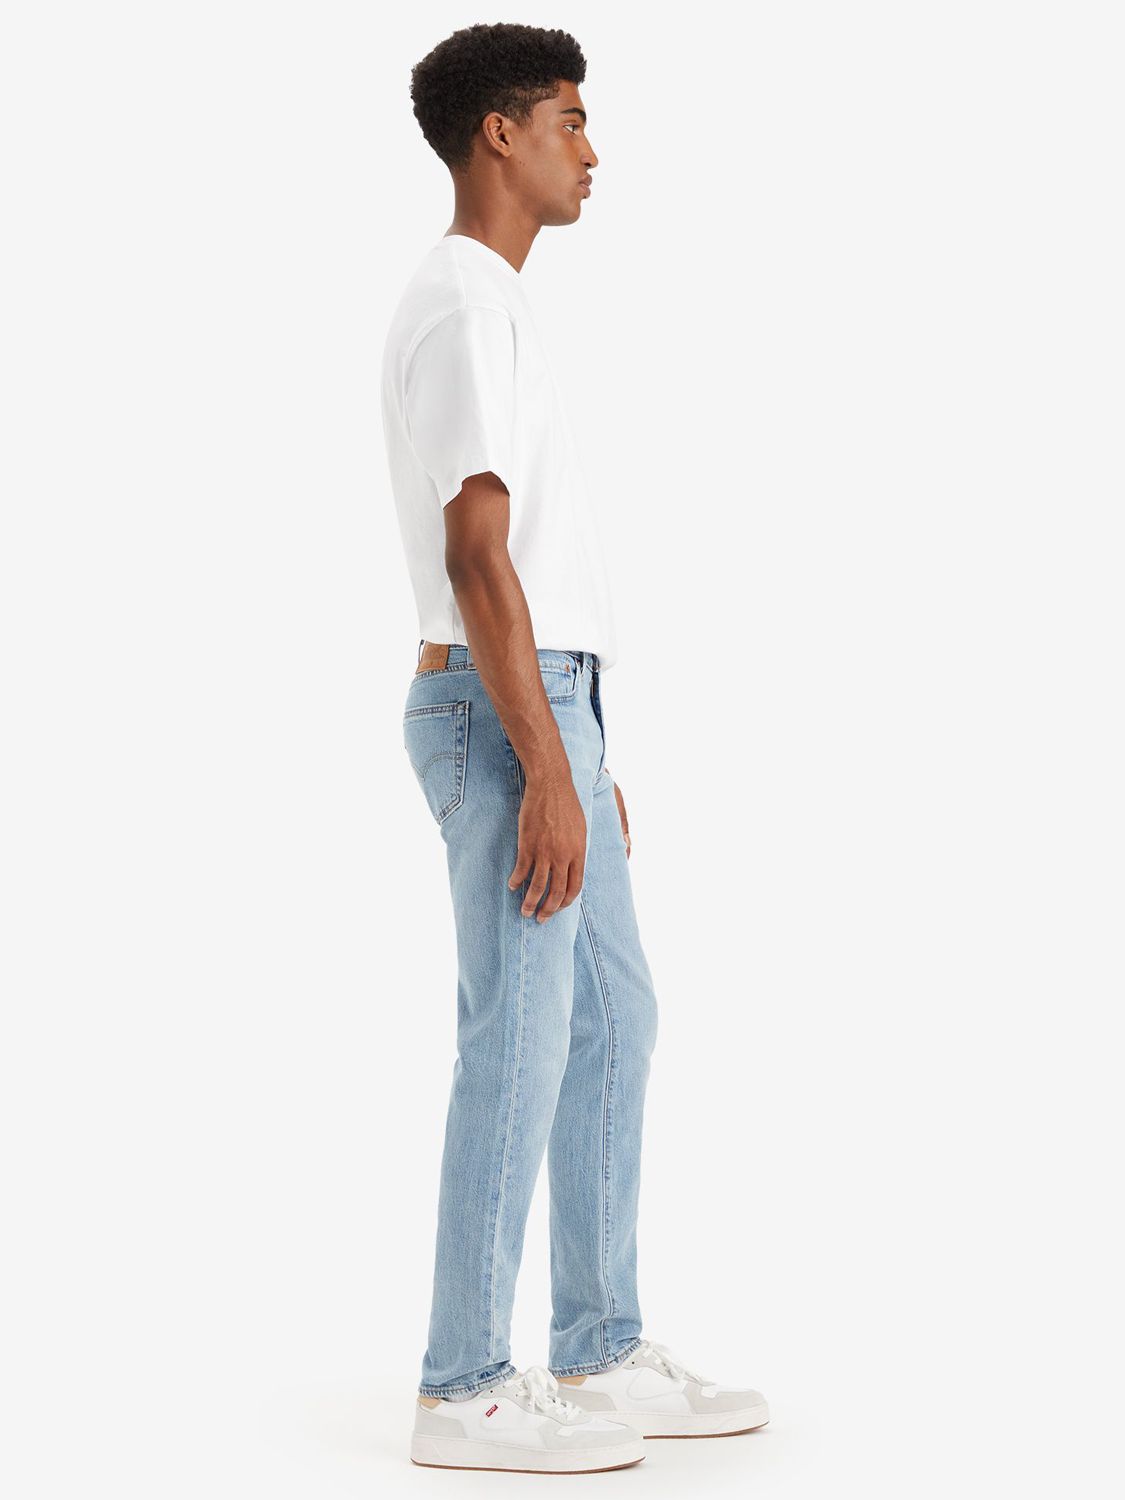 Levi's 511 Original Slim Jeans, Blue, 34S